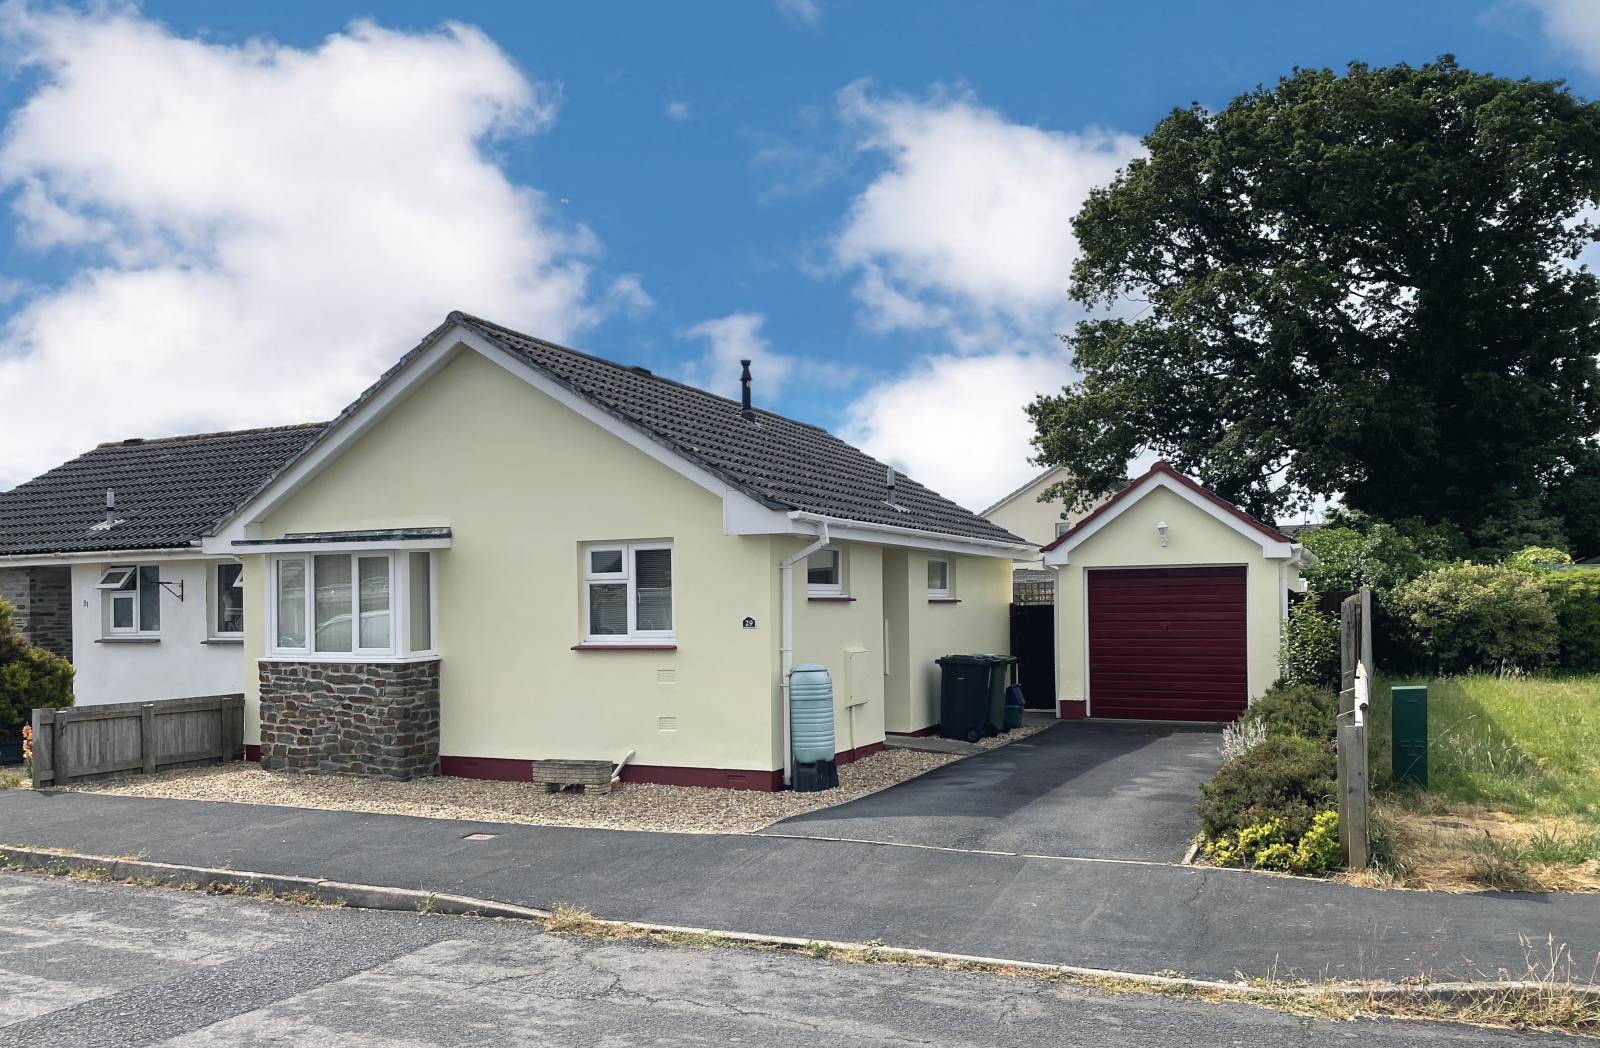 2 bed semi-detached house for sale in Bickington, Devon - Property Image 1